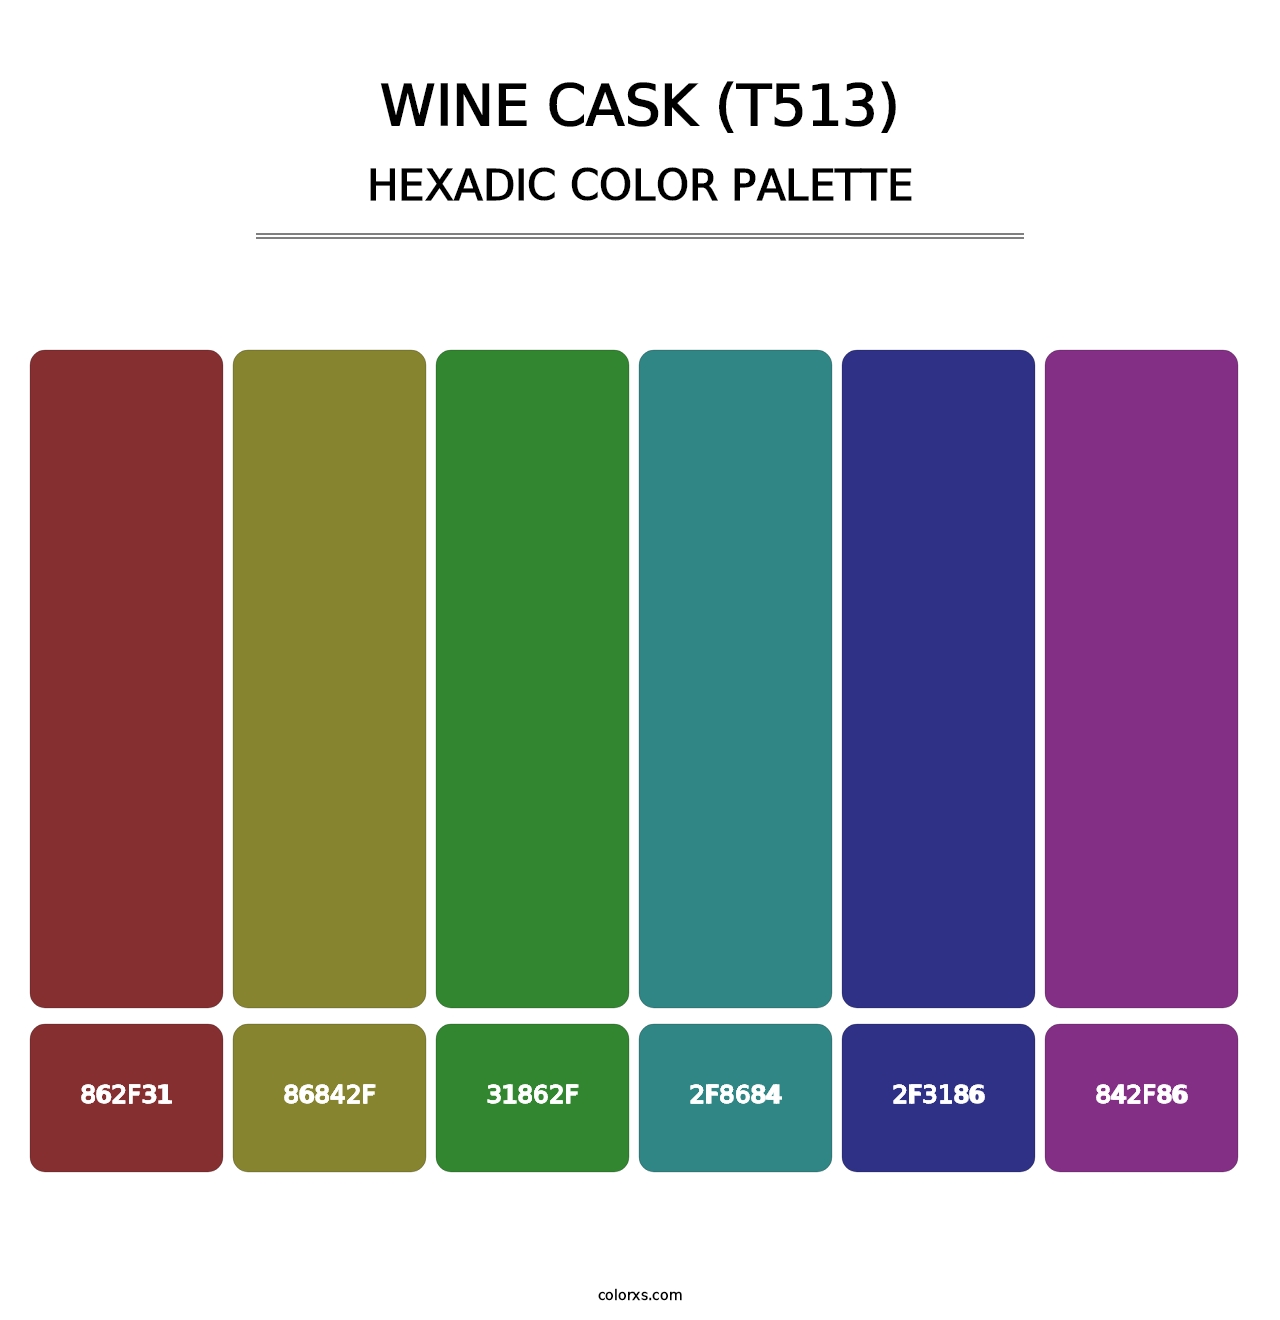 Wine Cask (T513) - Hexadic Color Palette